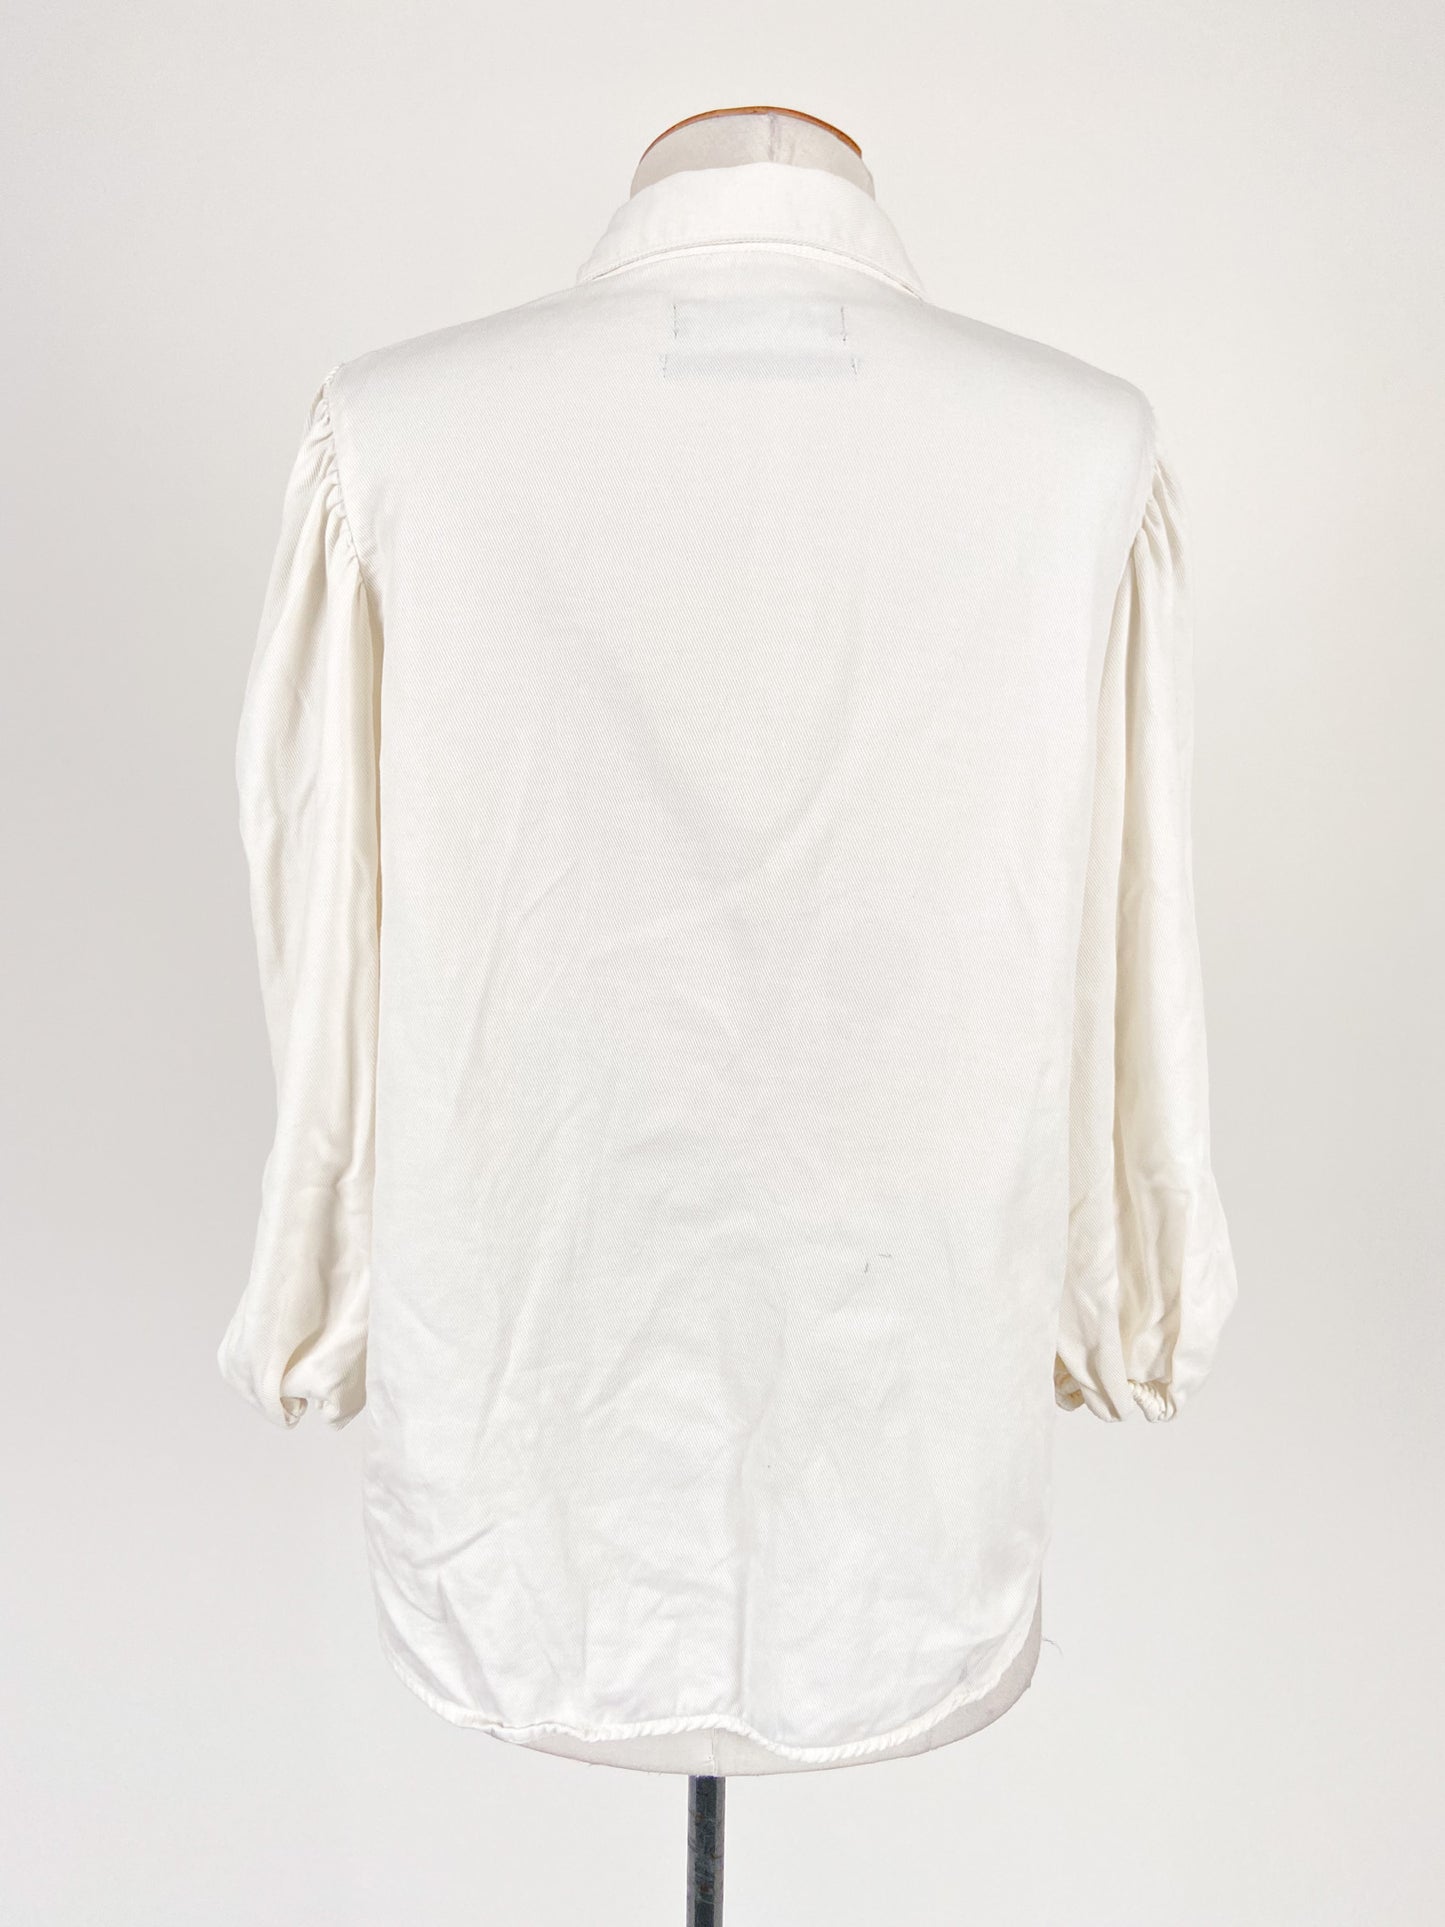 Zara | White Casual/Workwear Top | Size XS